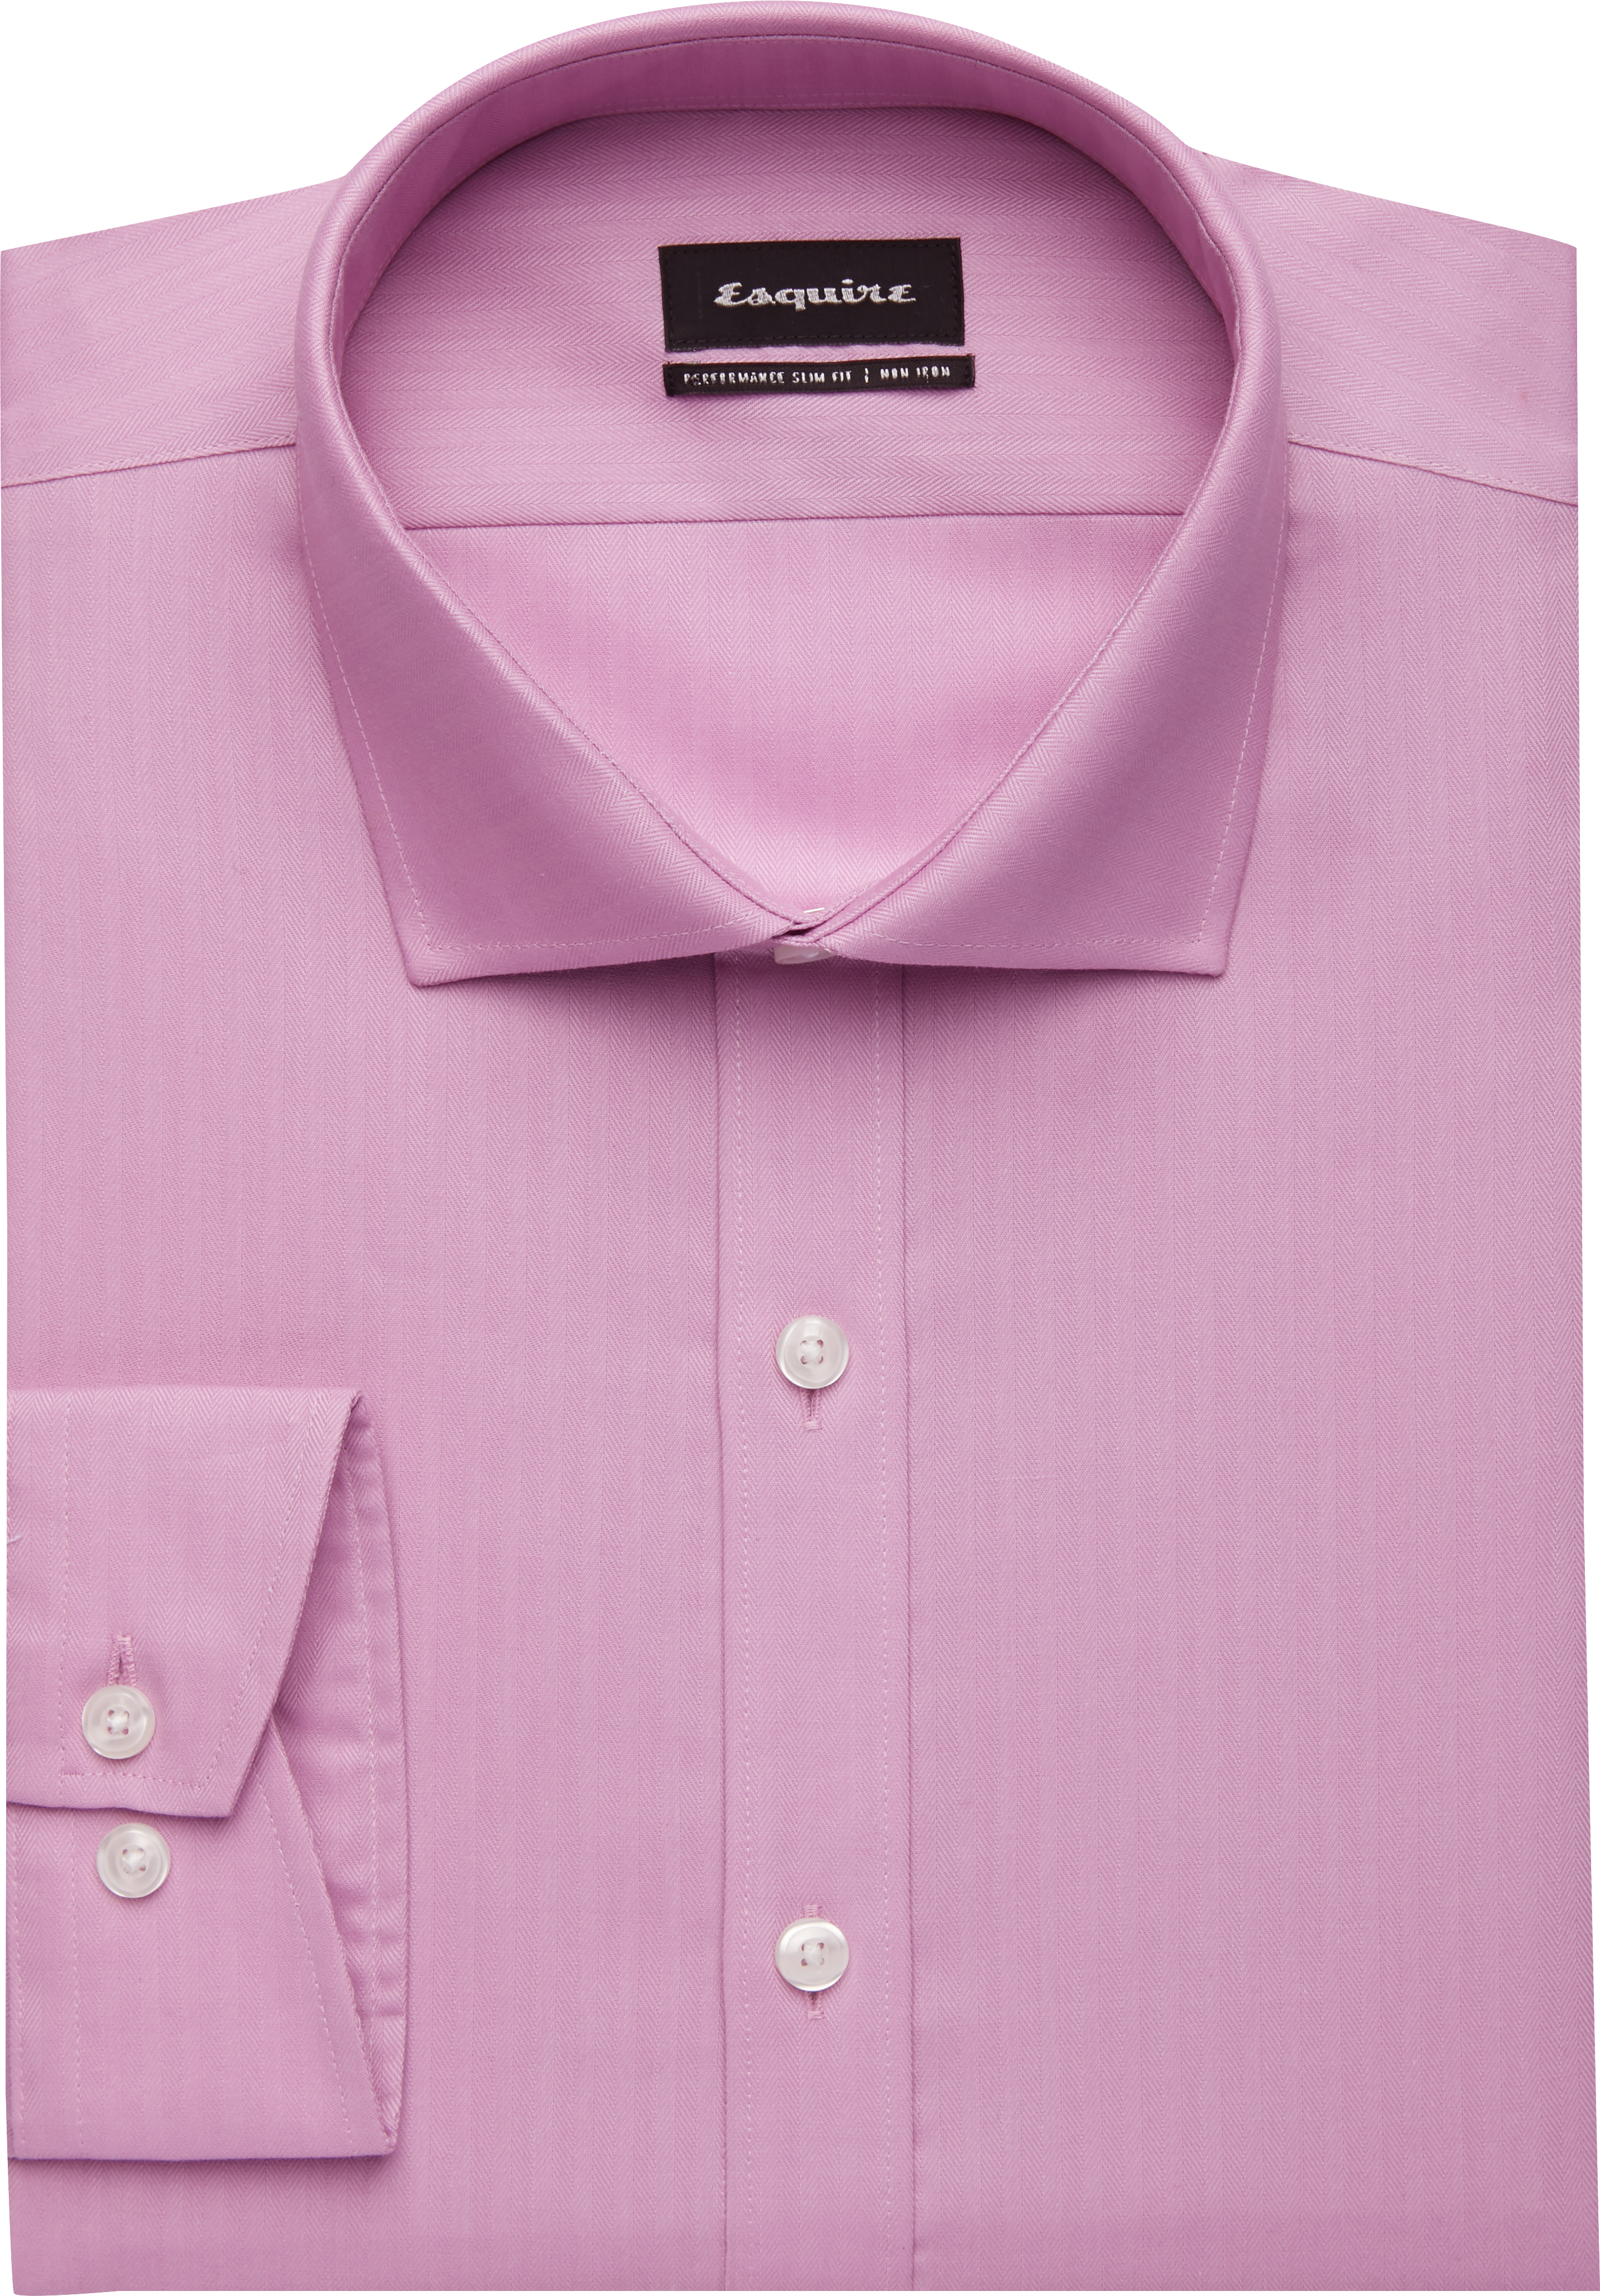 Esquire Non-Iron Pink Herringbone Slim Fit Dress Shirt - Men's Shirts ...